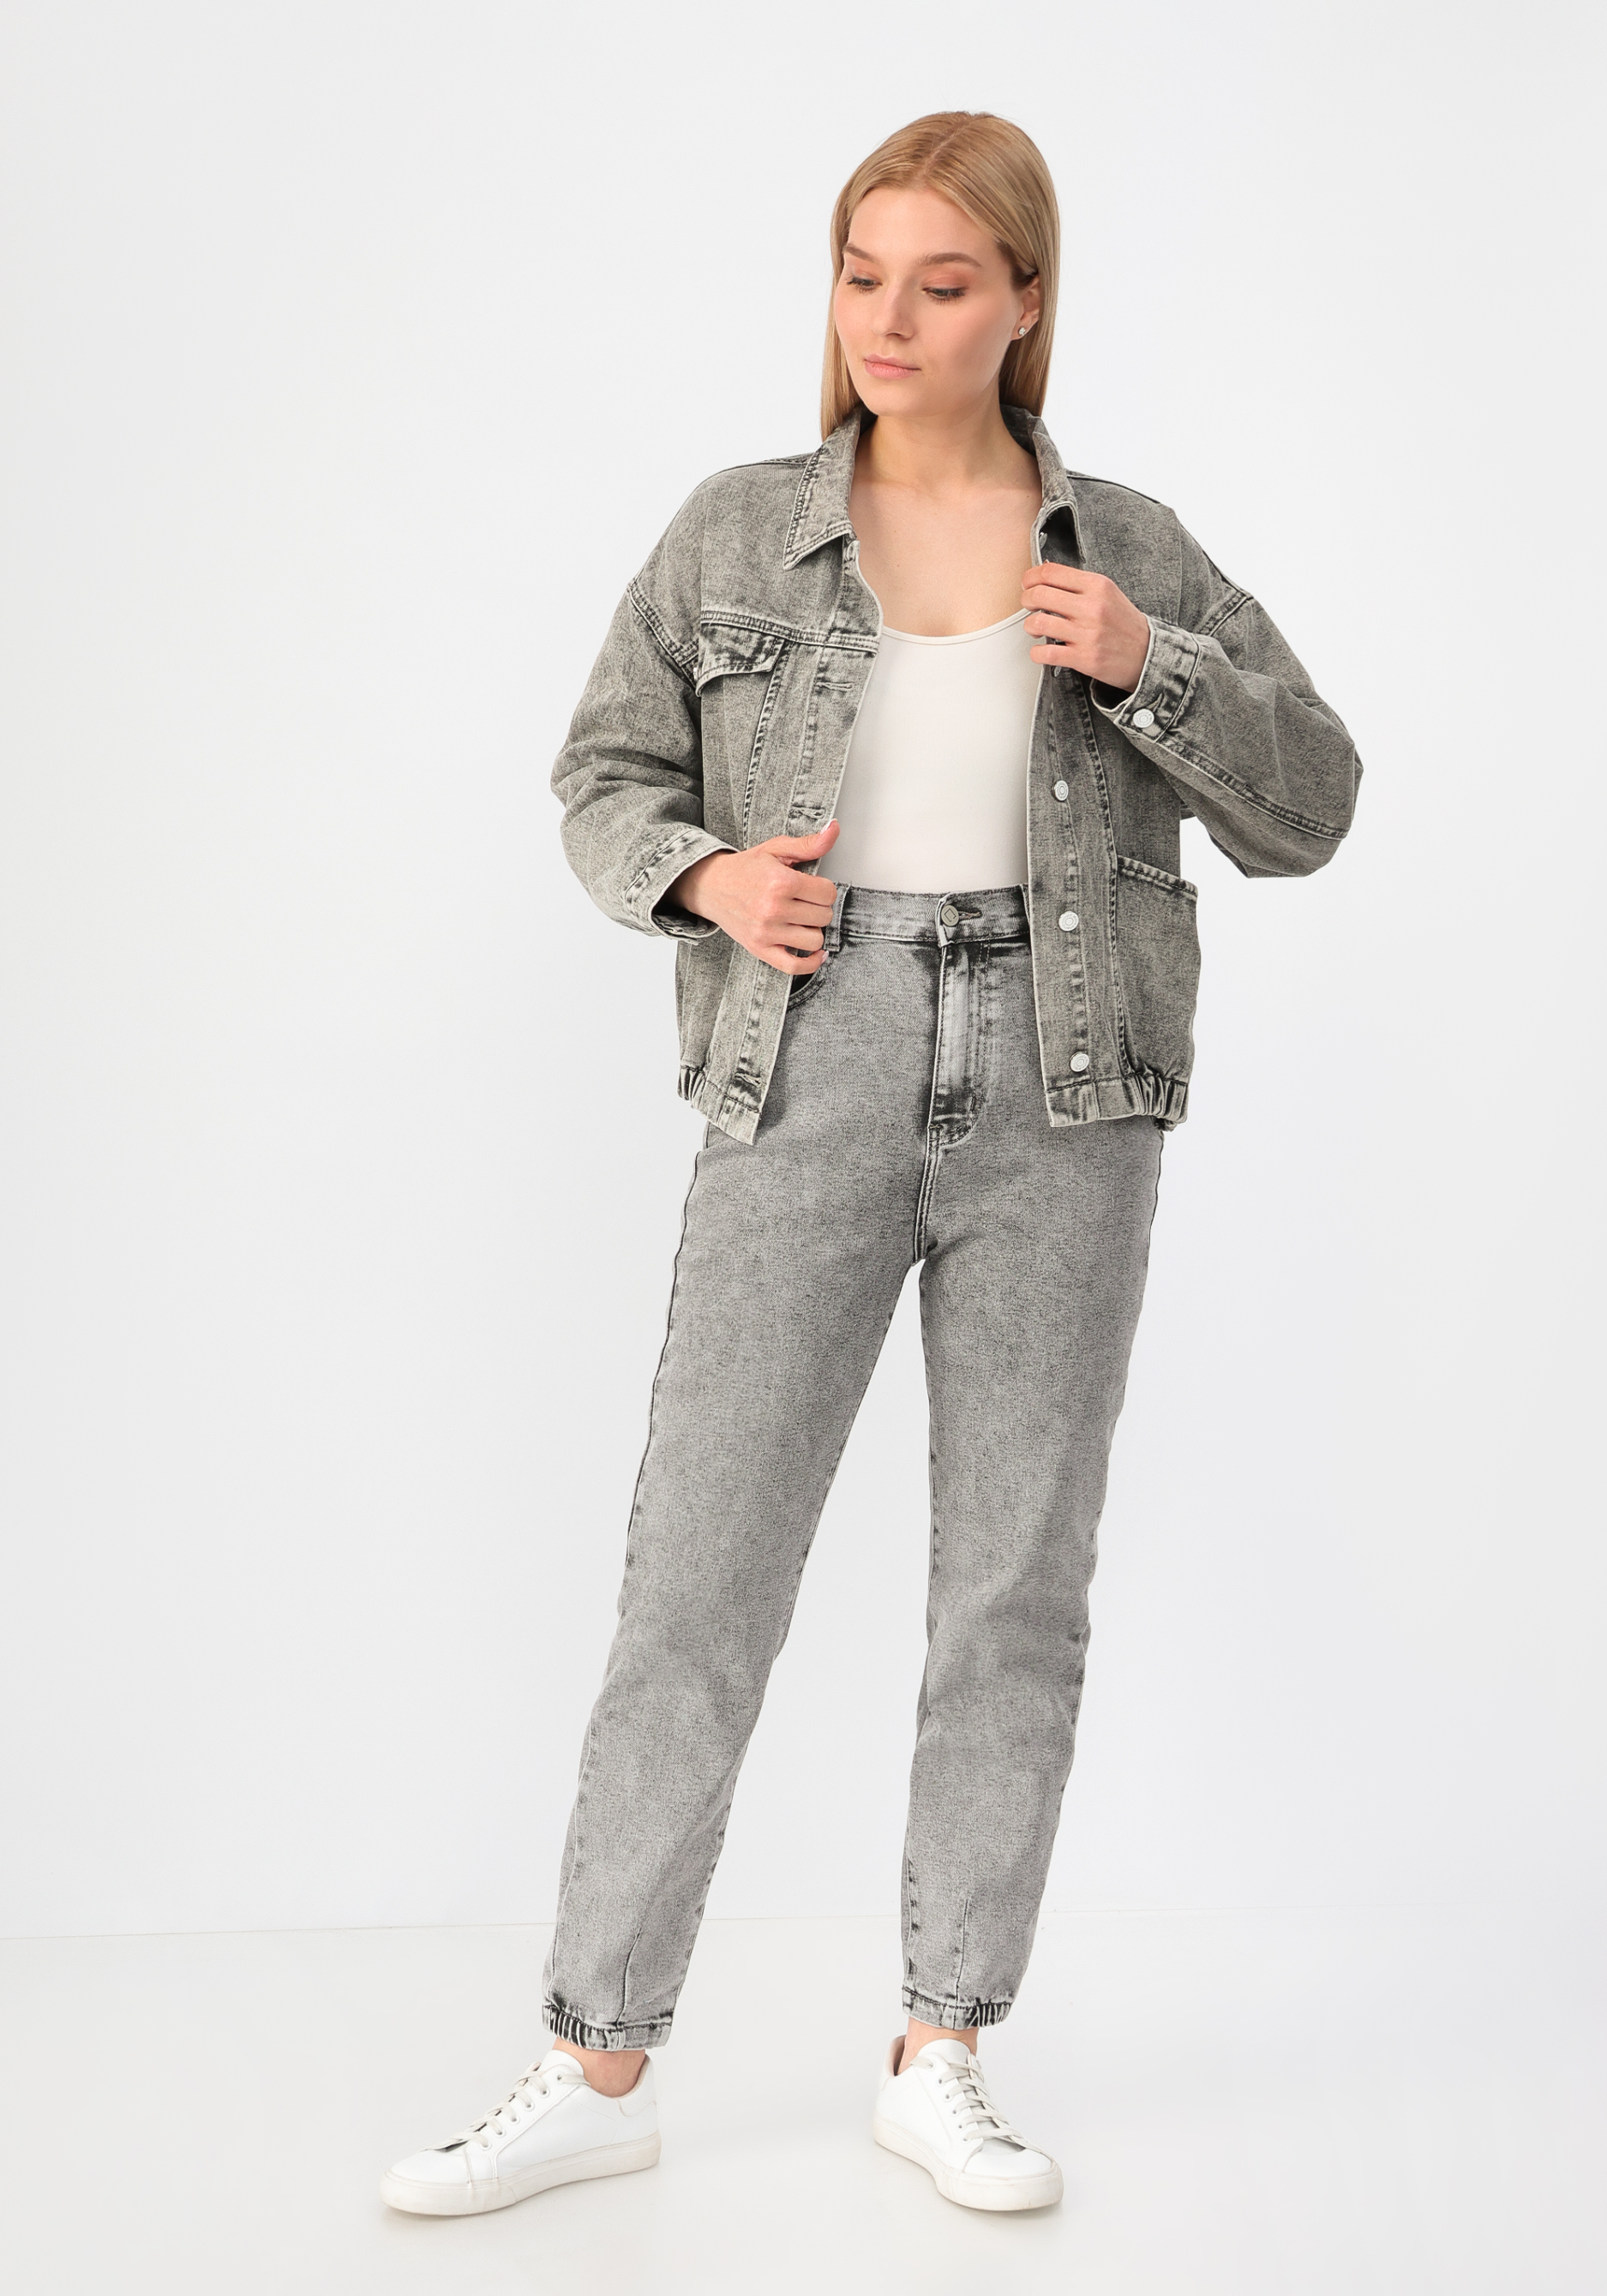 Куртка джинсовая "Милена" No name, размер 48, цвет серый - фото 9